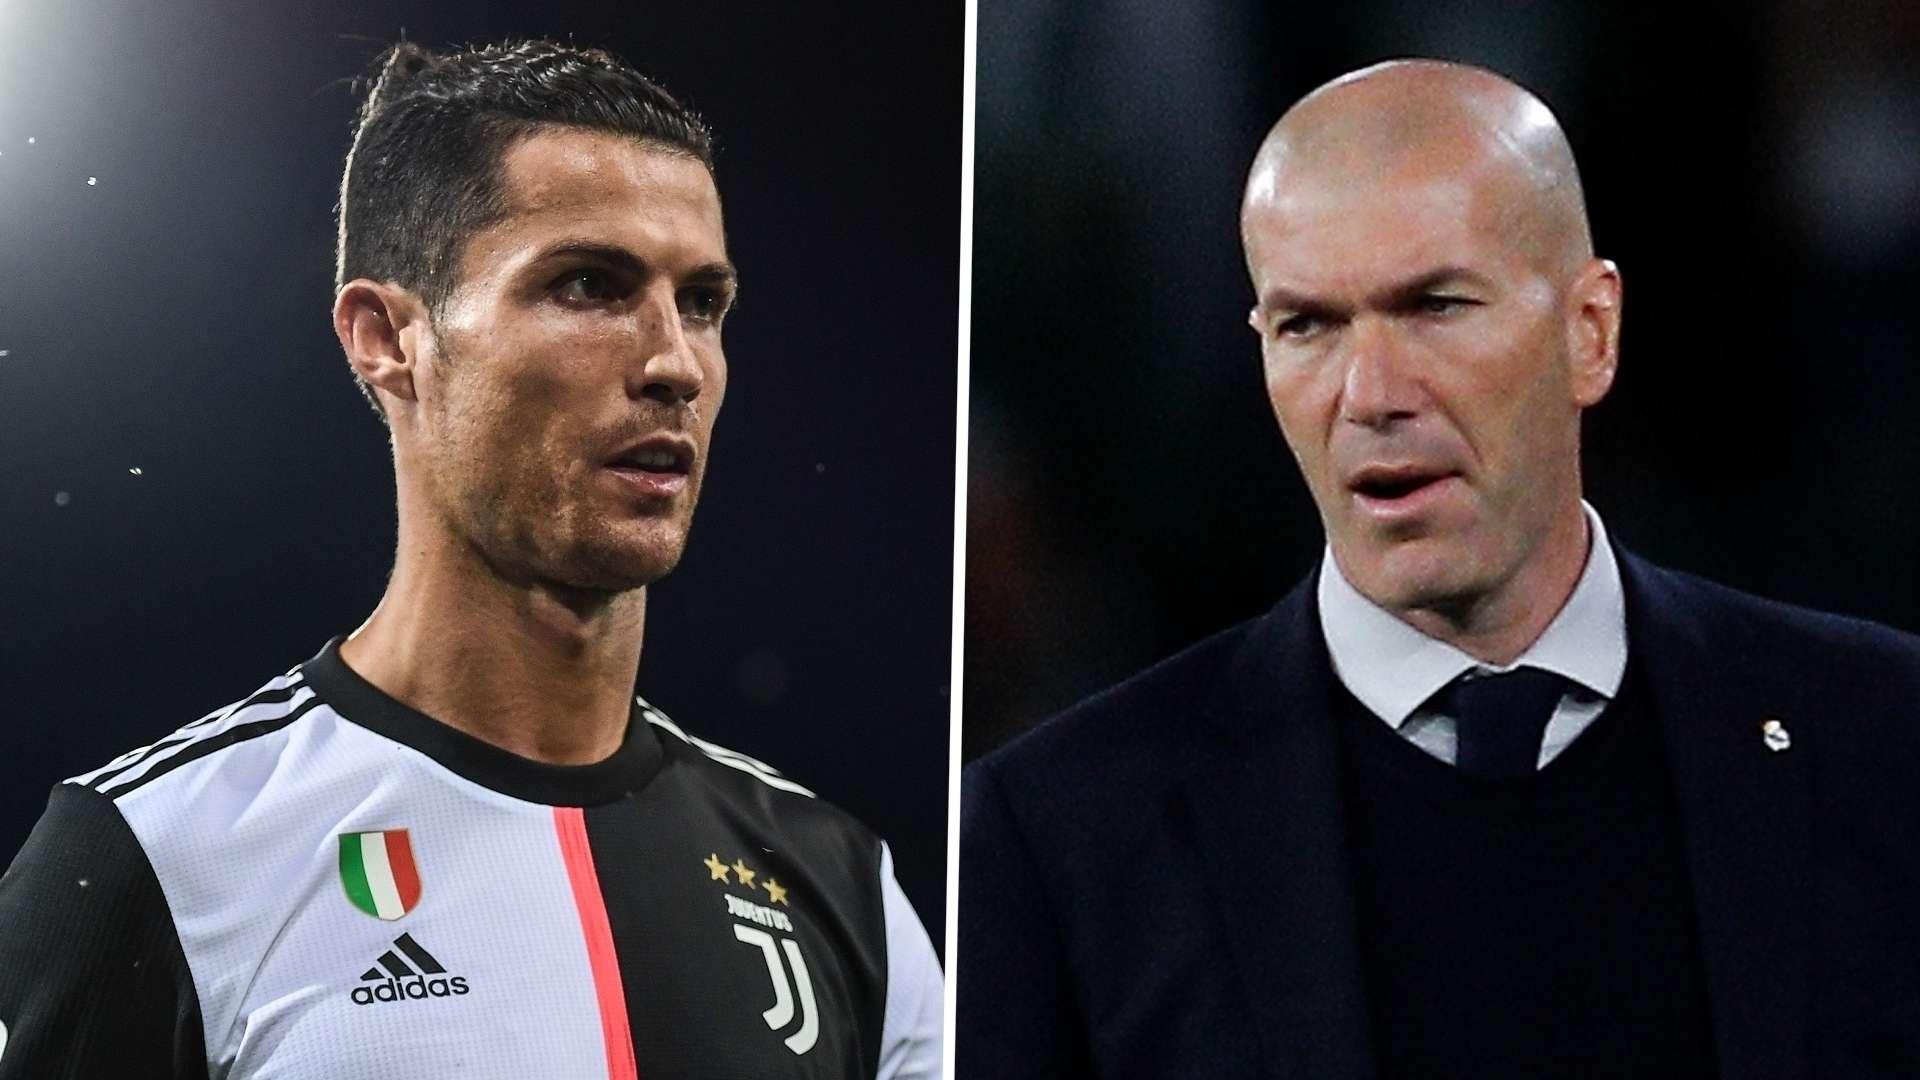 Cristiano Ronaldo/Zinedine Zidane 2019-20